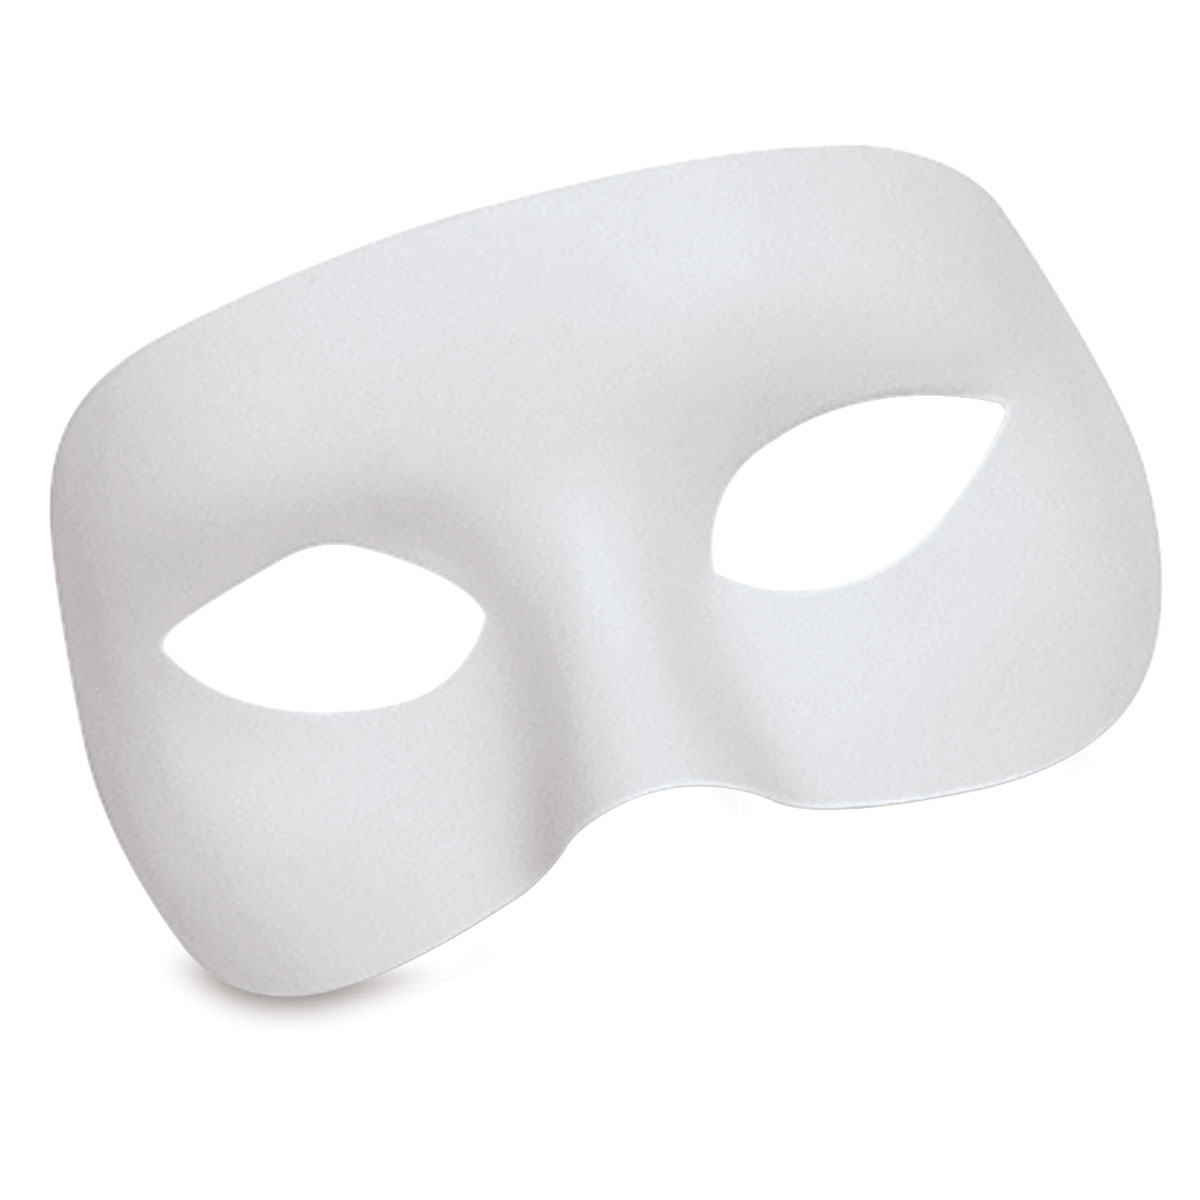 Creativity Street Plastic Face Masks